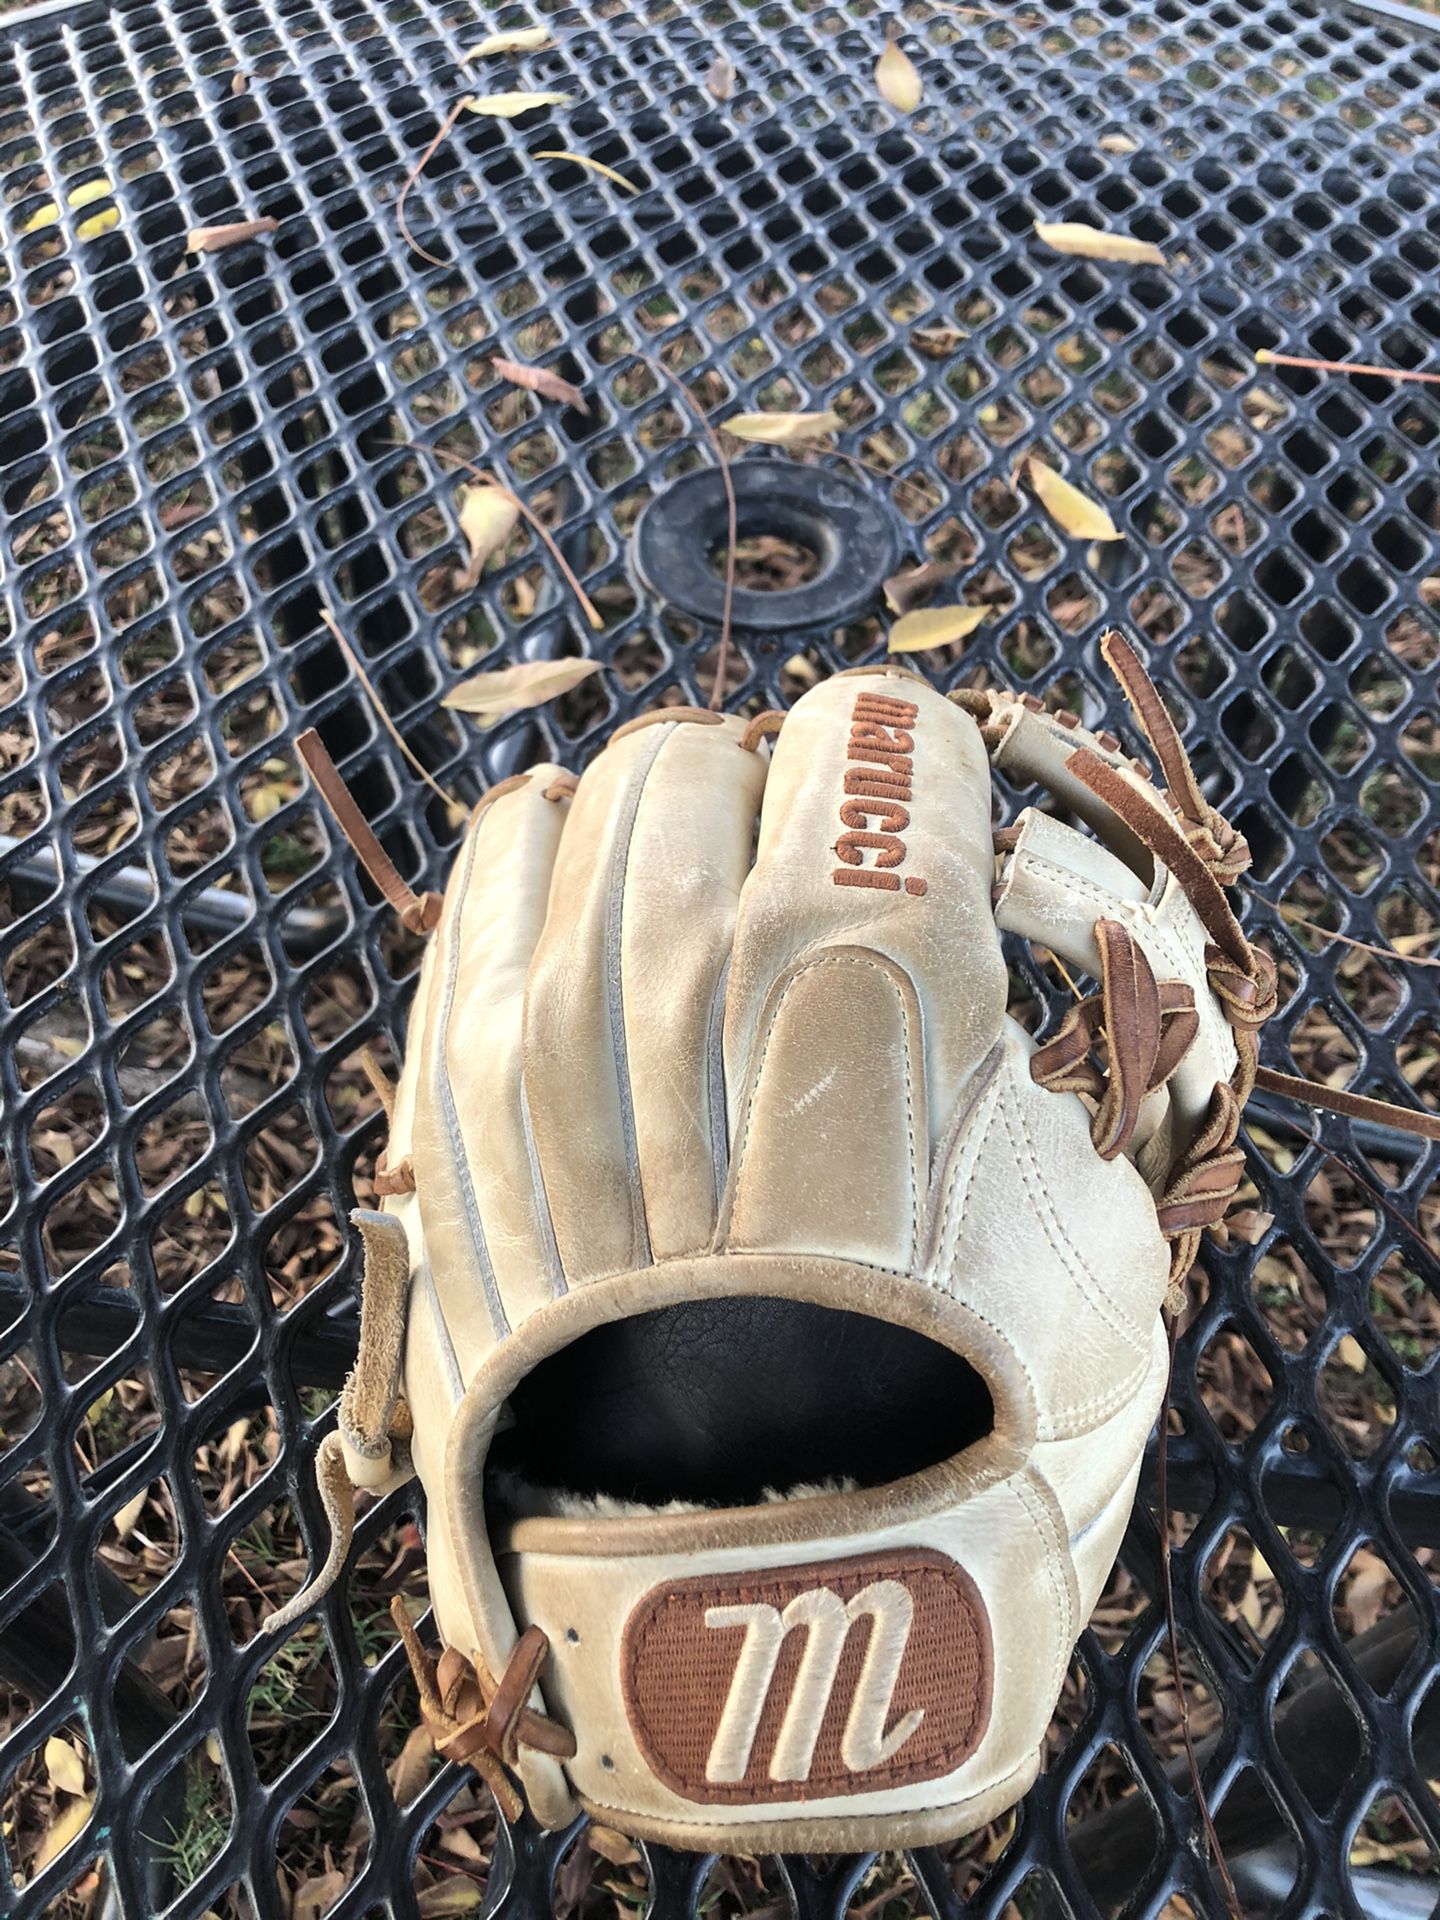 Maruccii Baseball Glove